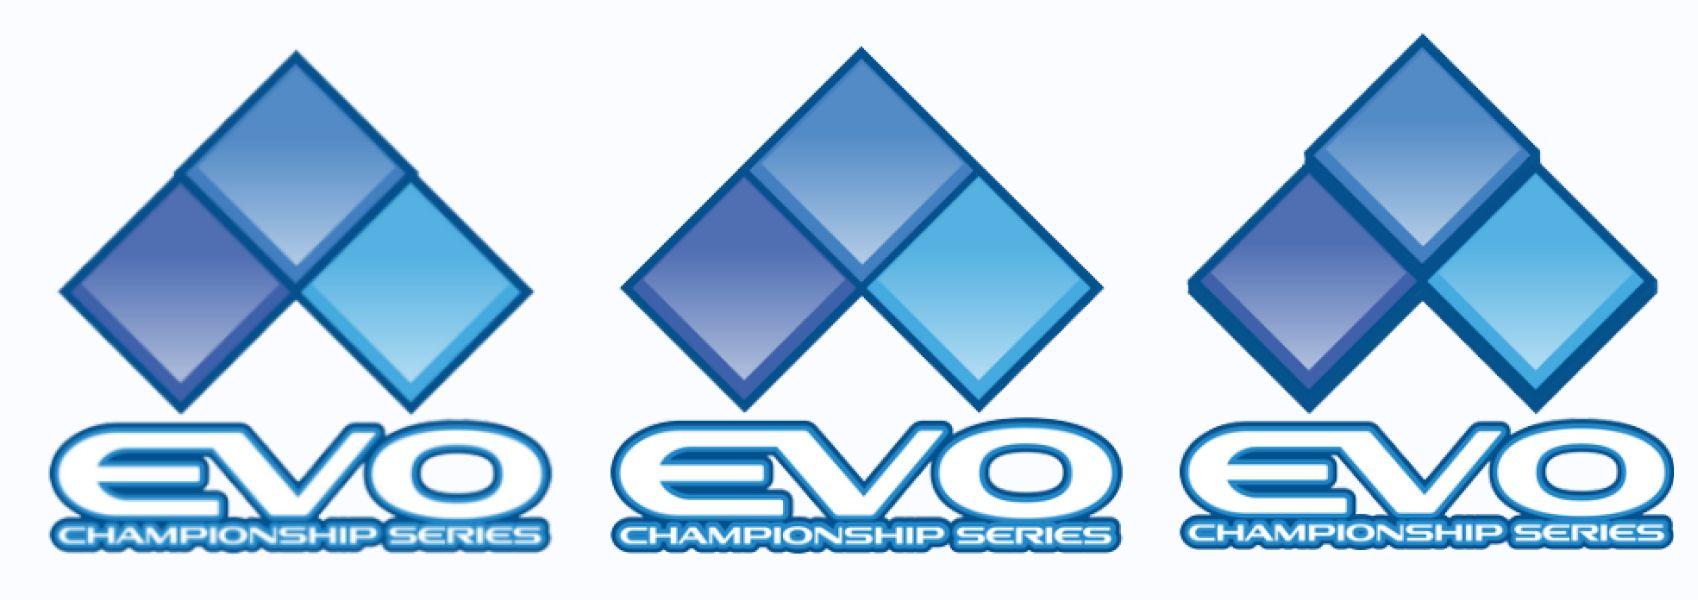 EVO Logo - Anyone slightly irritated with the evo logo?